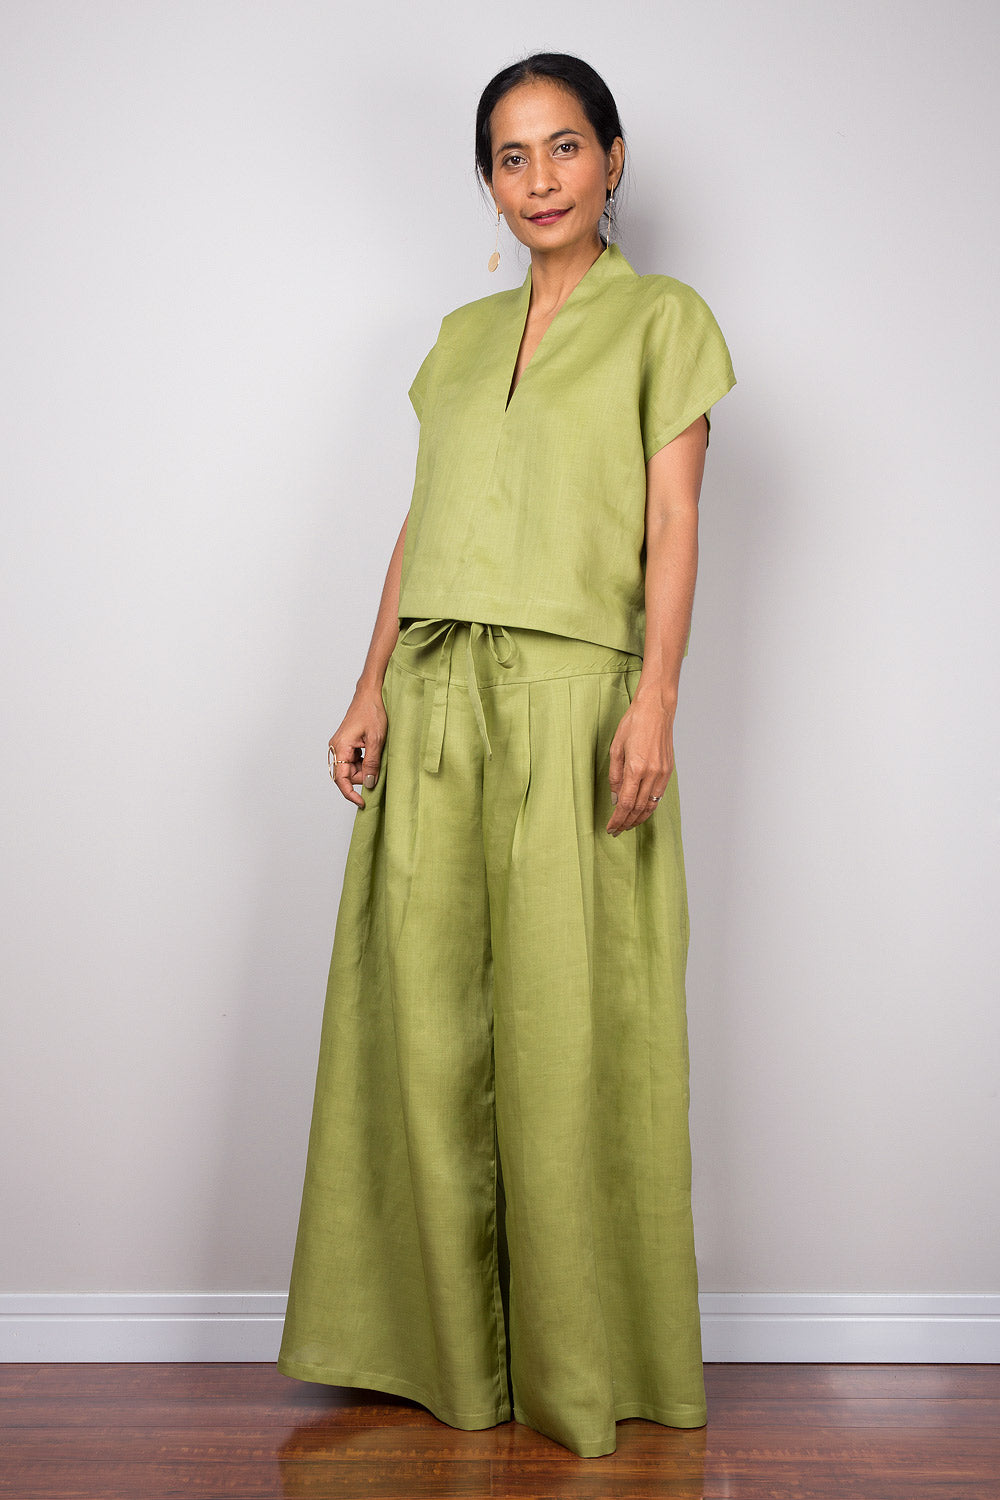 Handmade green linen long wide leg palazzo pants. Olive green high wai ...